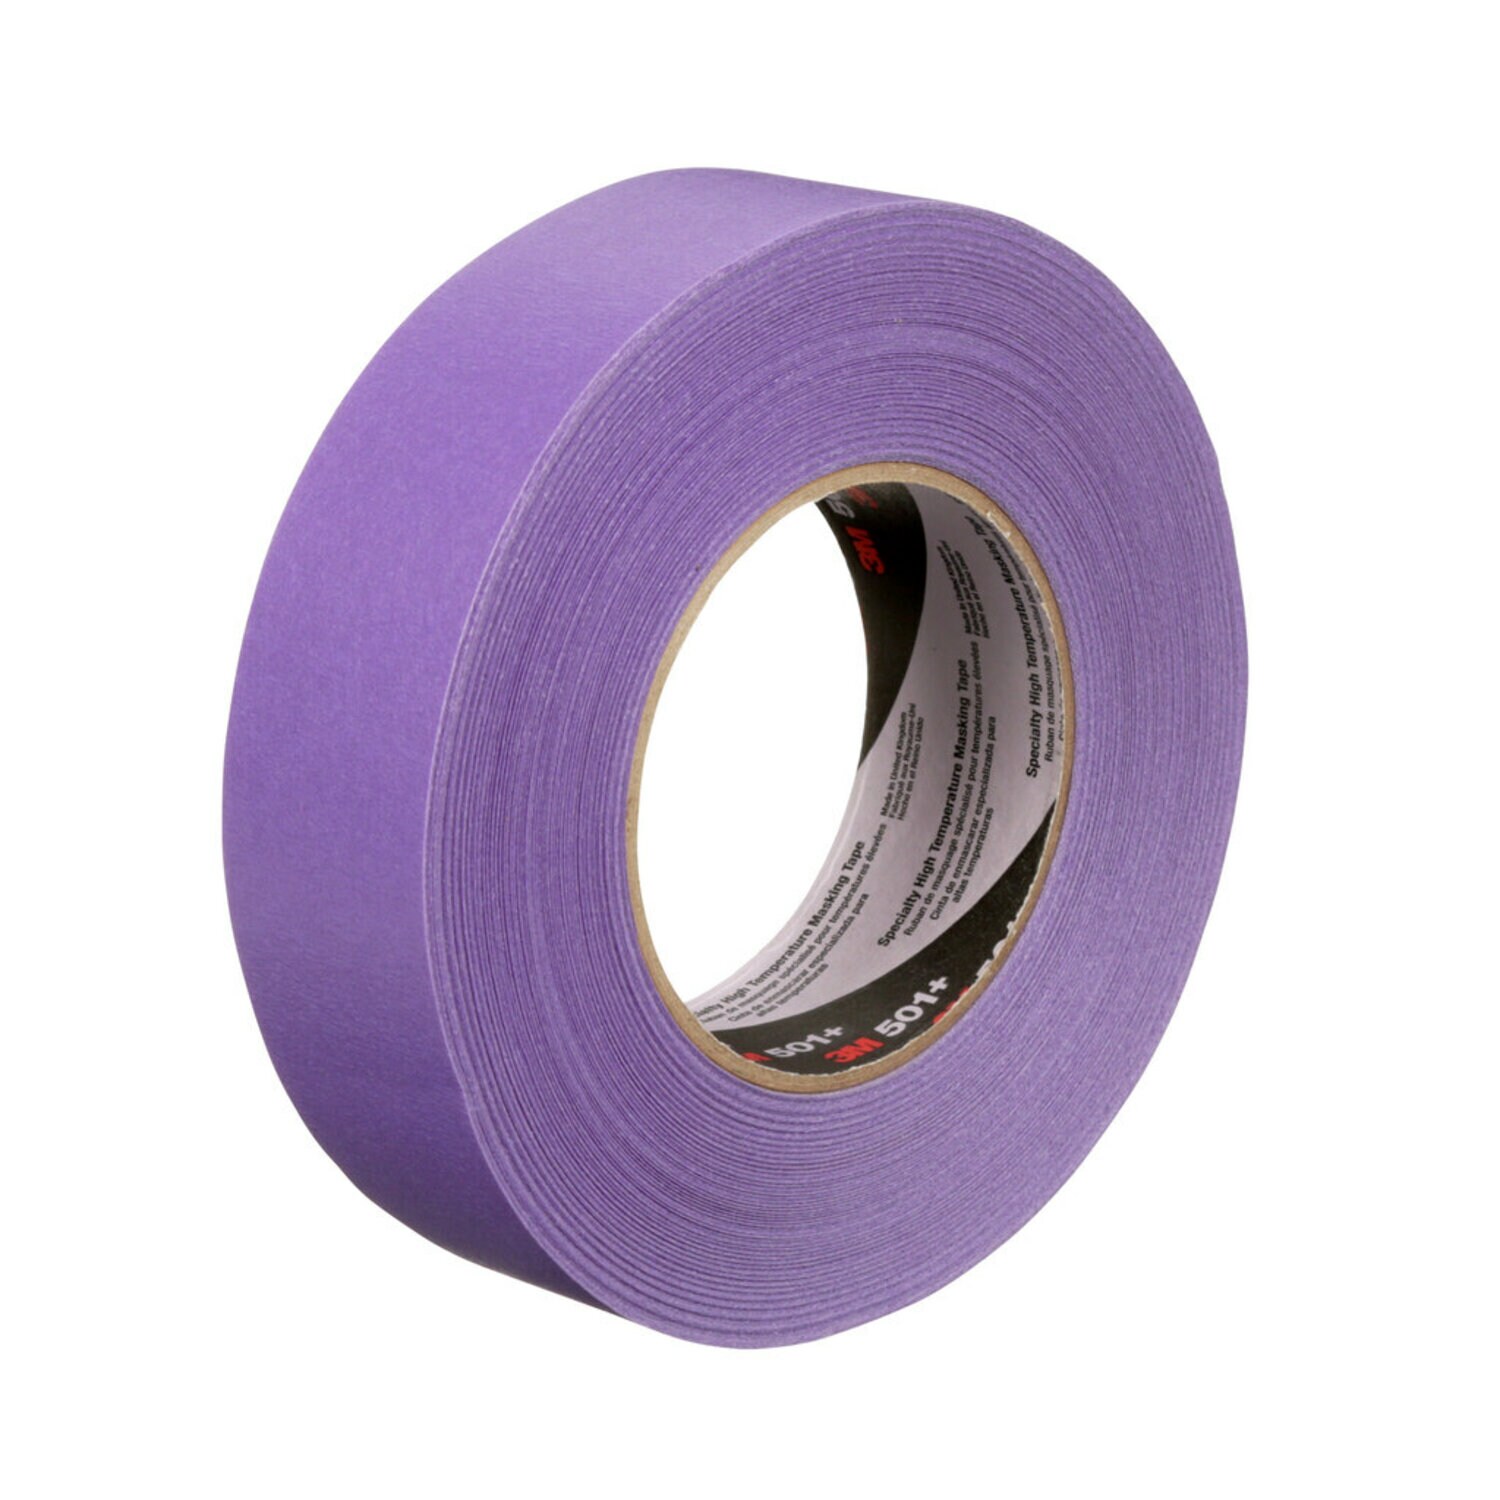 7100086190 - "3M Specialty High Temperature Masking Tape 501+, Purple, 36 mm x 55
m,
 6.0 mil, 24 Rolls/Case"